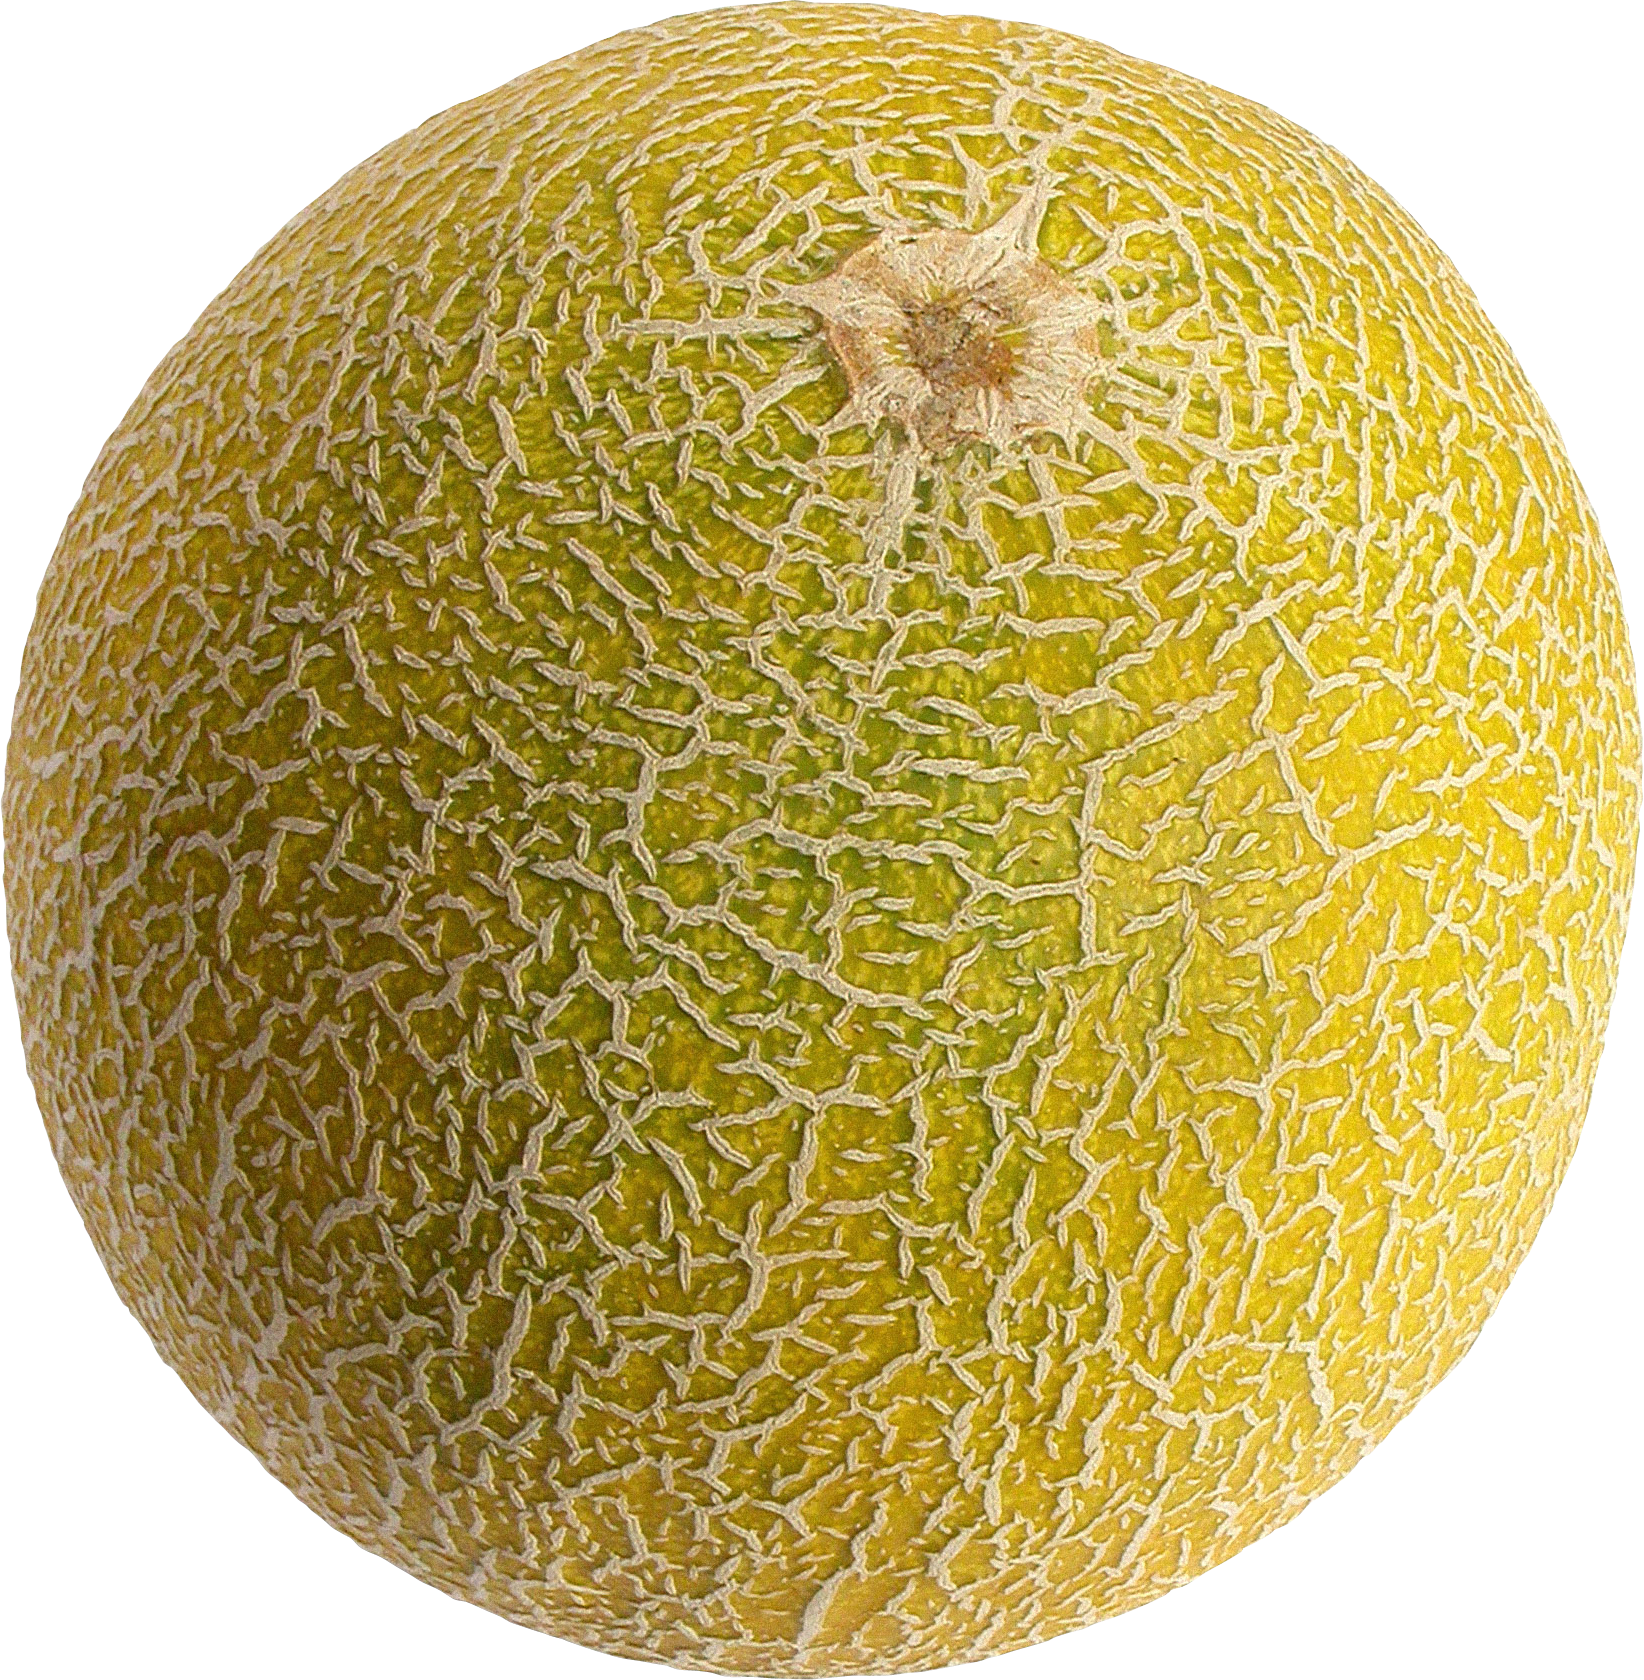 Cantaloupe Melon PNG Images HD